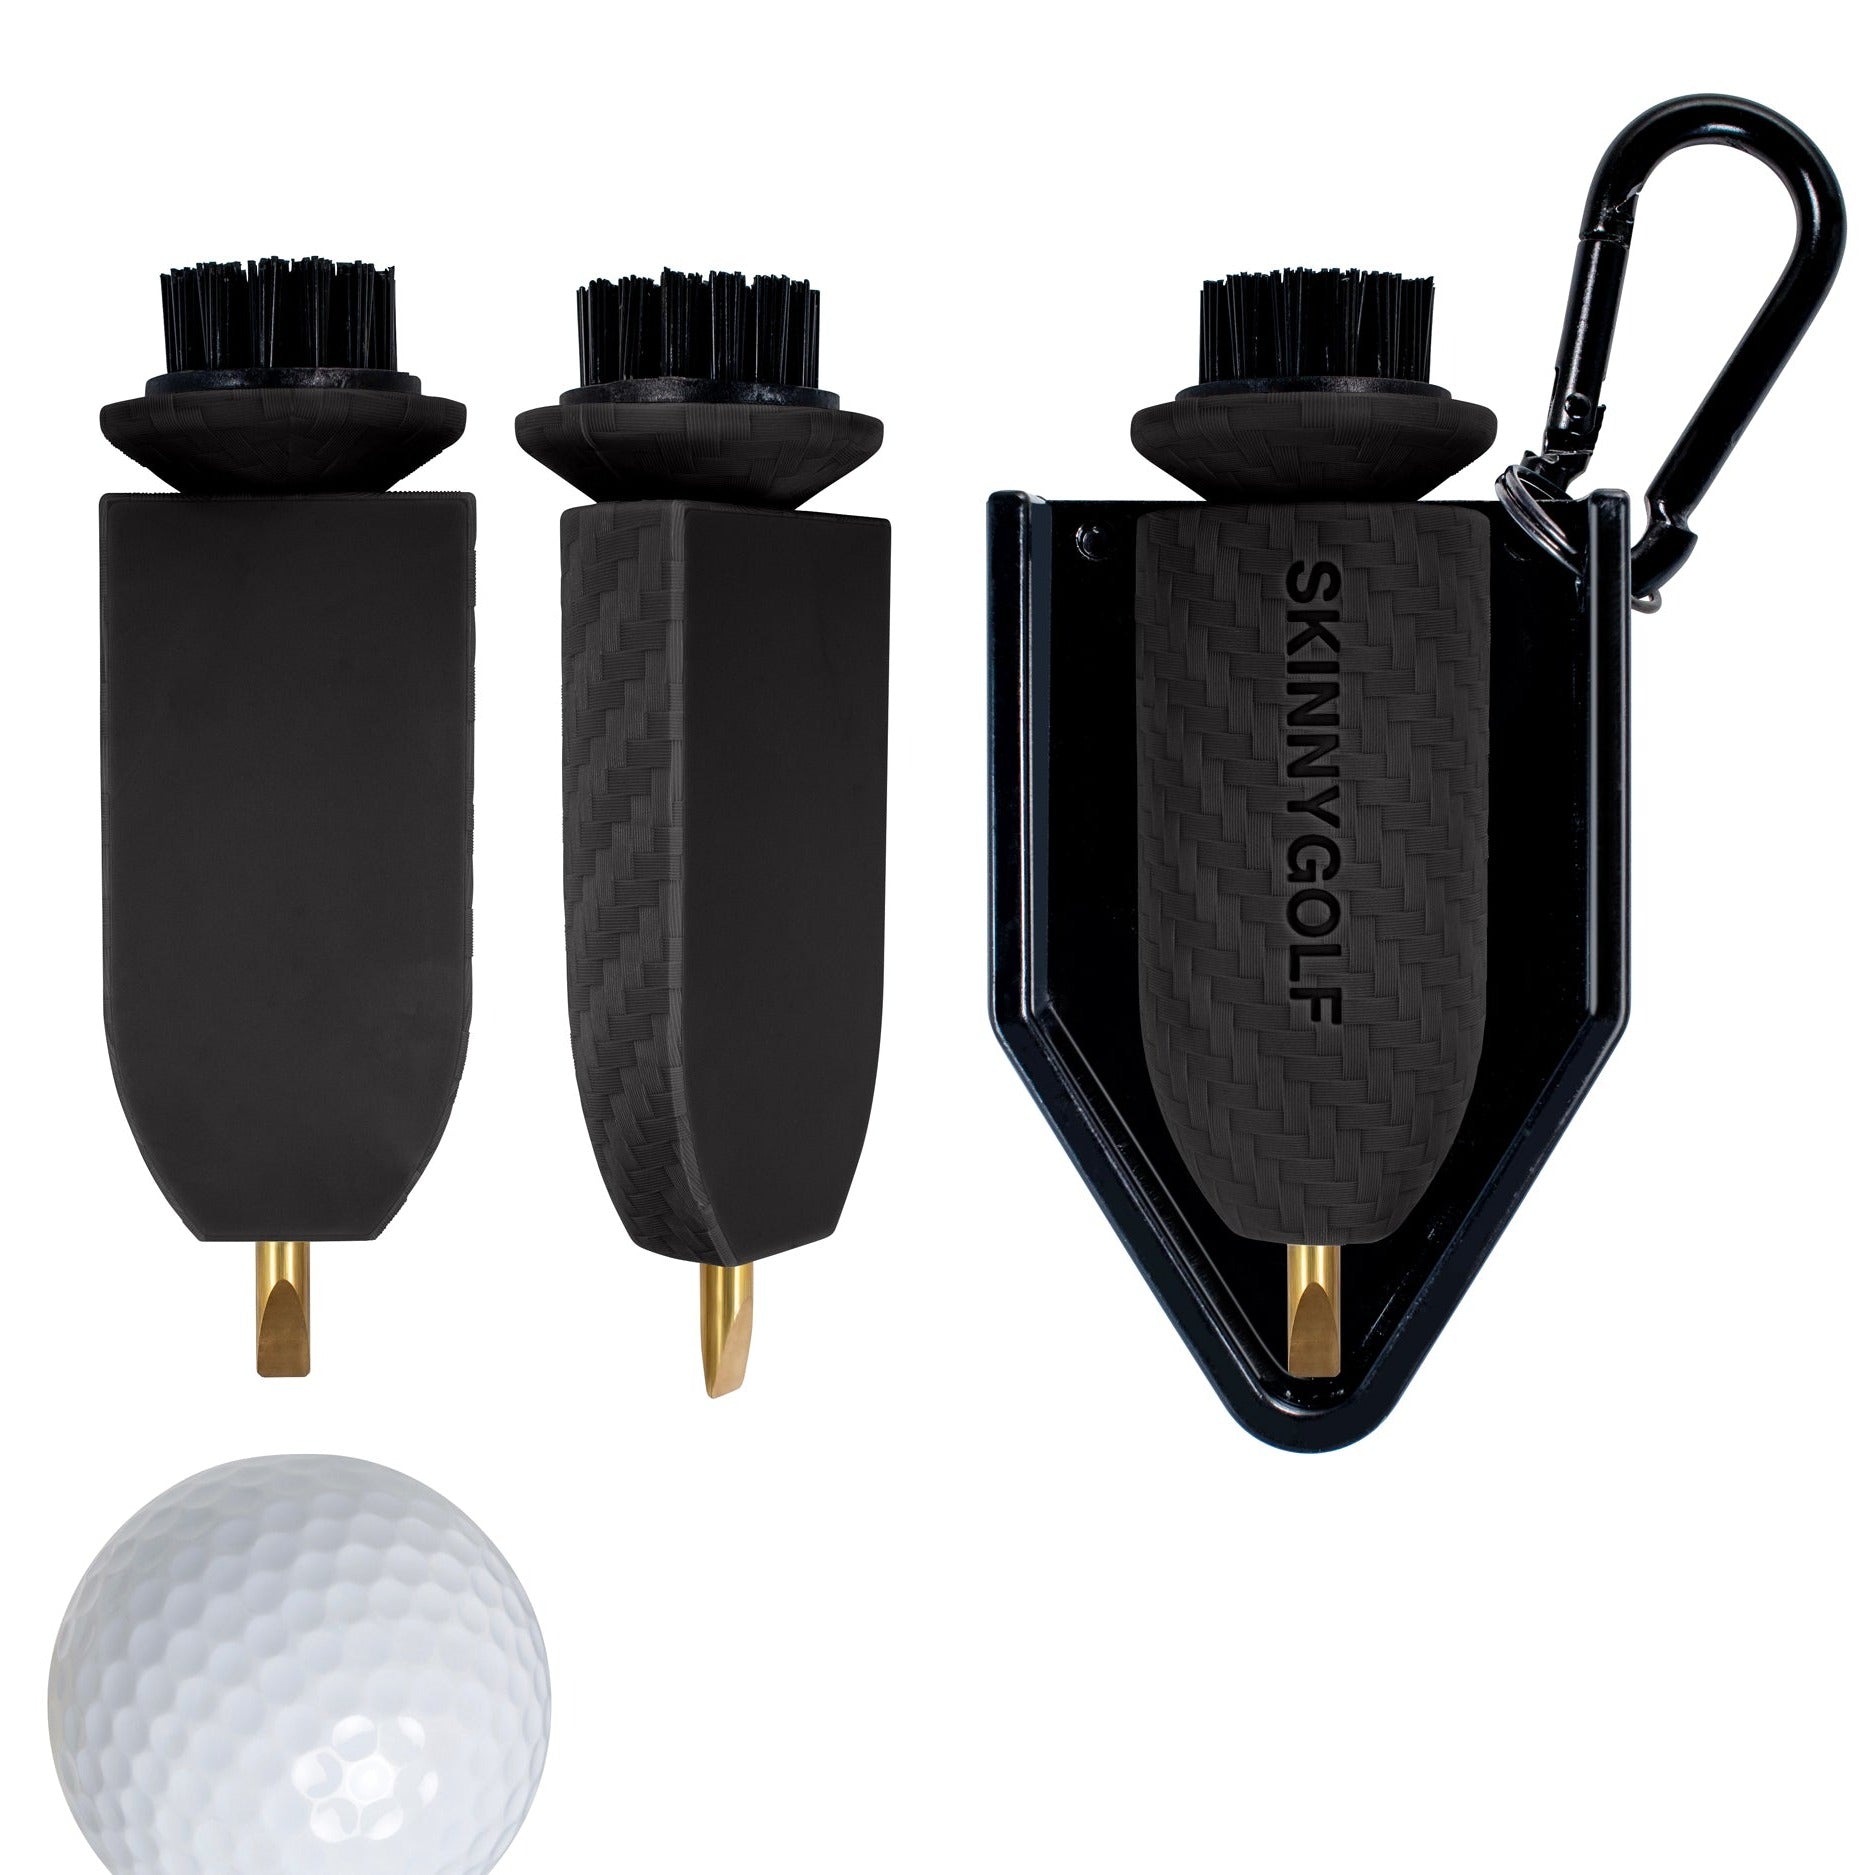 A stylish golf brush that cleans well. – Niche Golf